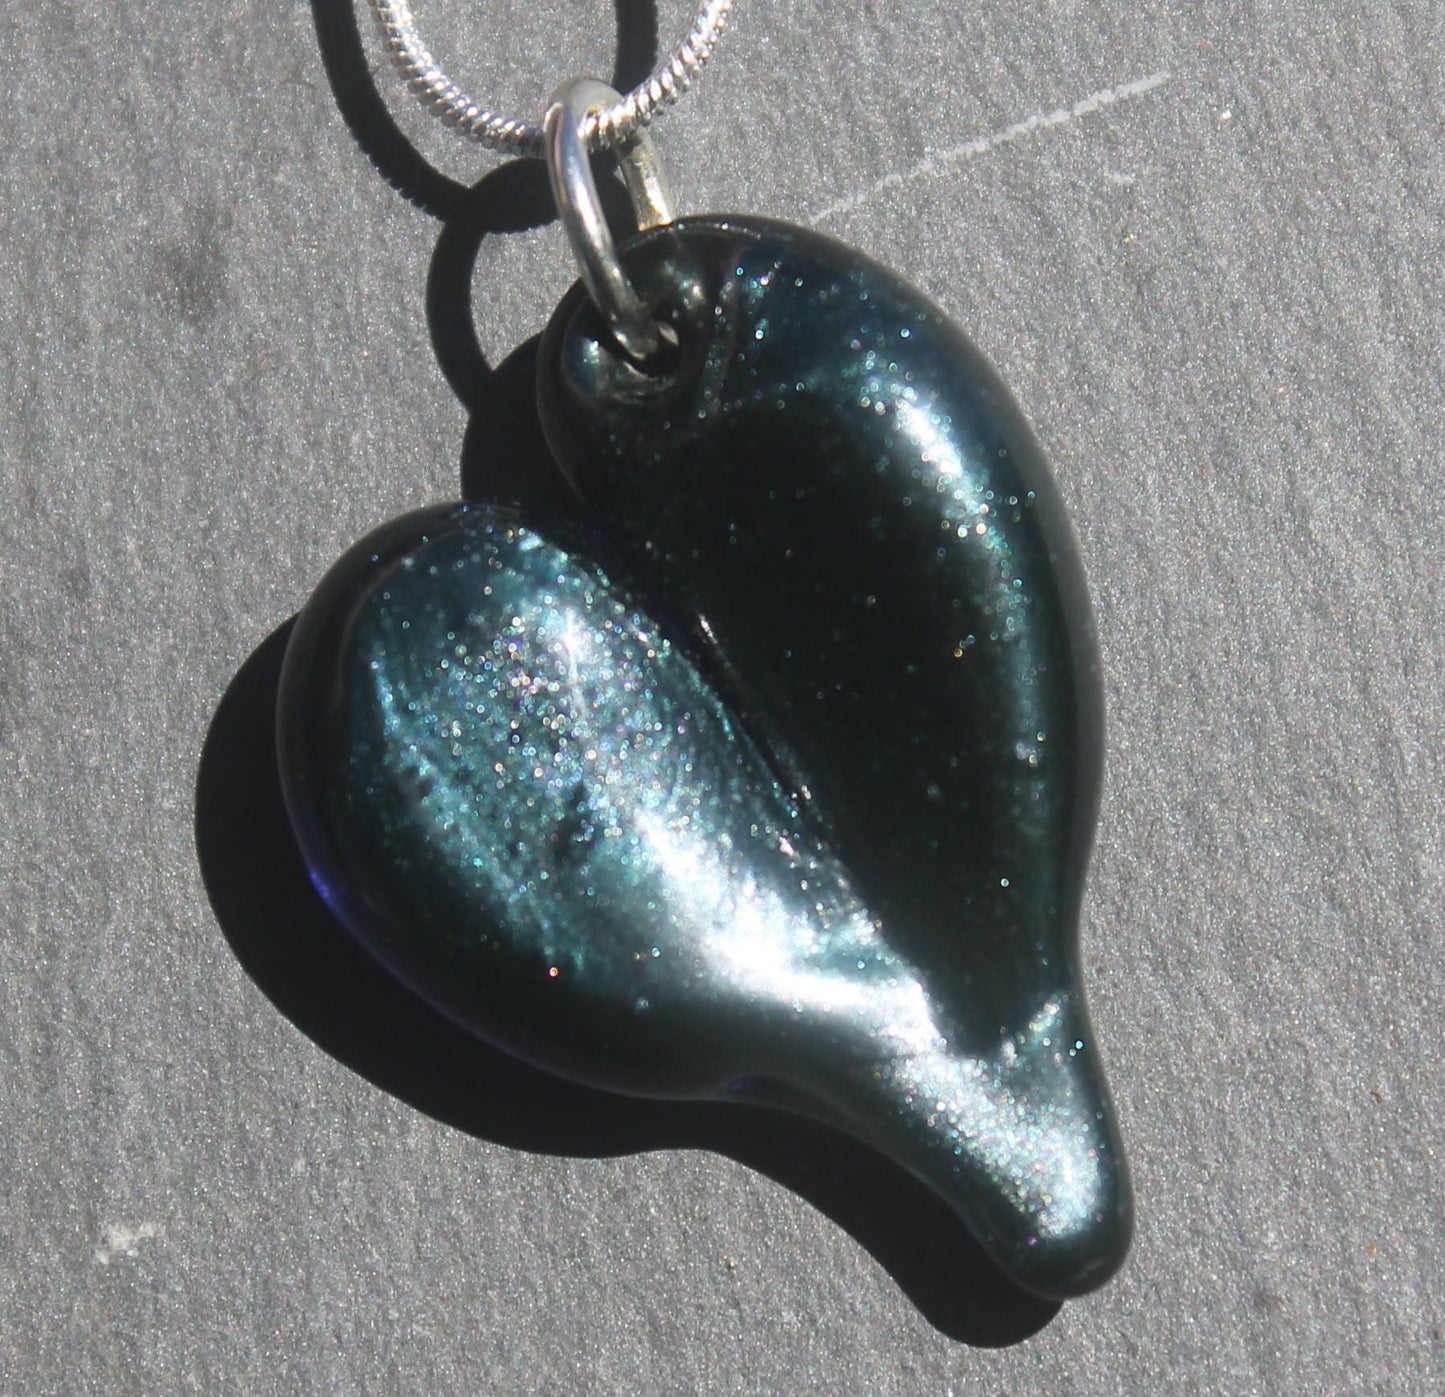 Sparkling Blue Heart Necklace Glass, Lampwork Boro Jewelry, Hand Blown Boro Pendant, Handmade Heart